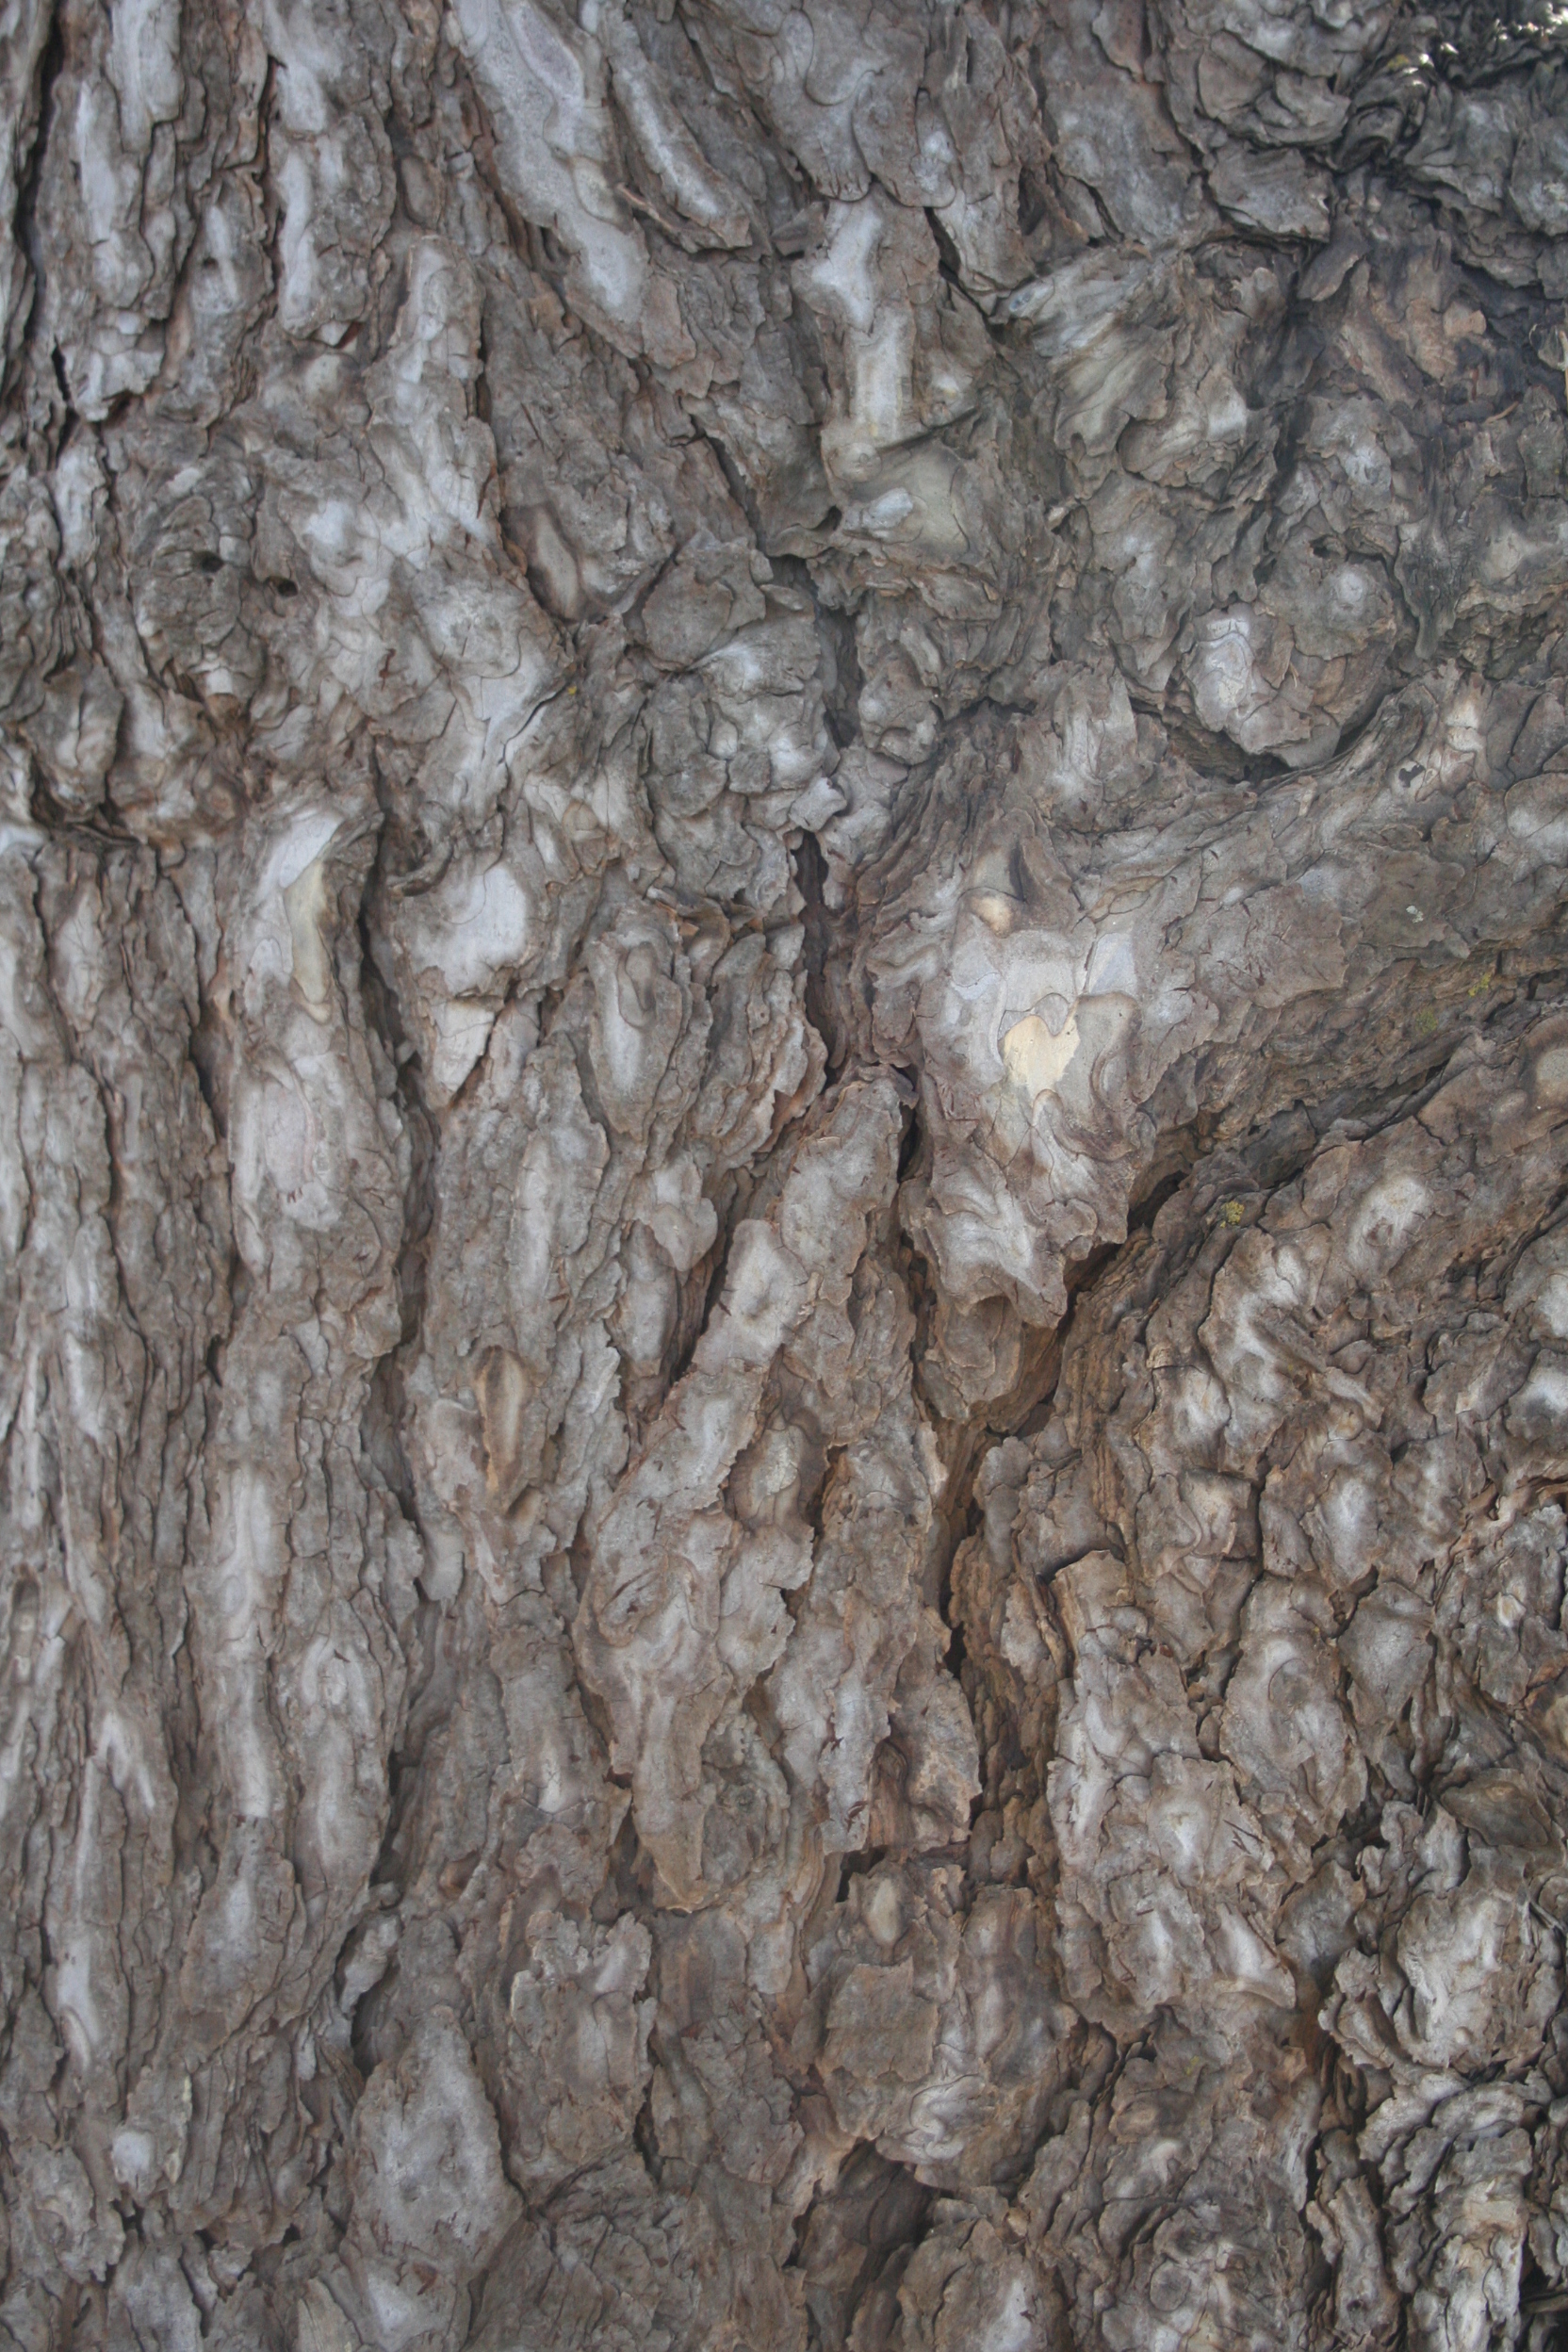 Close up of bark 